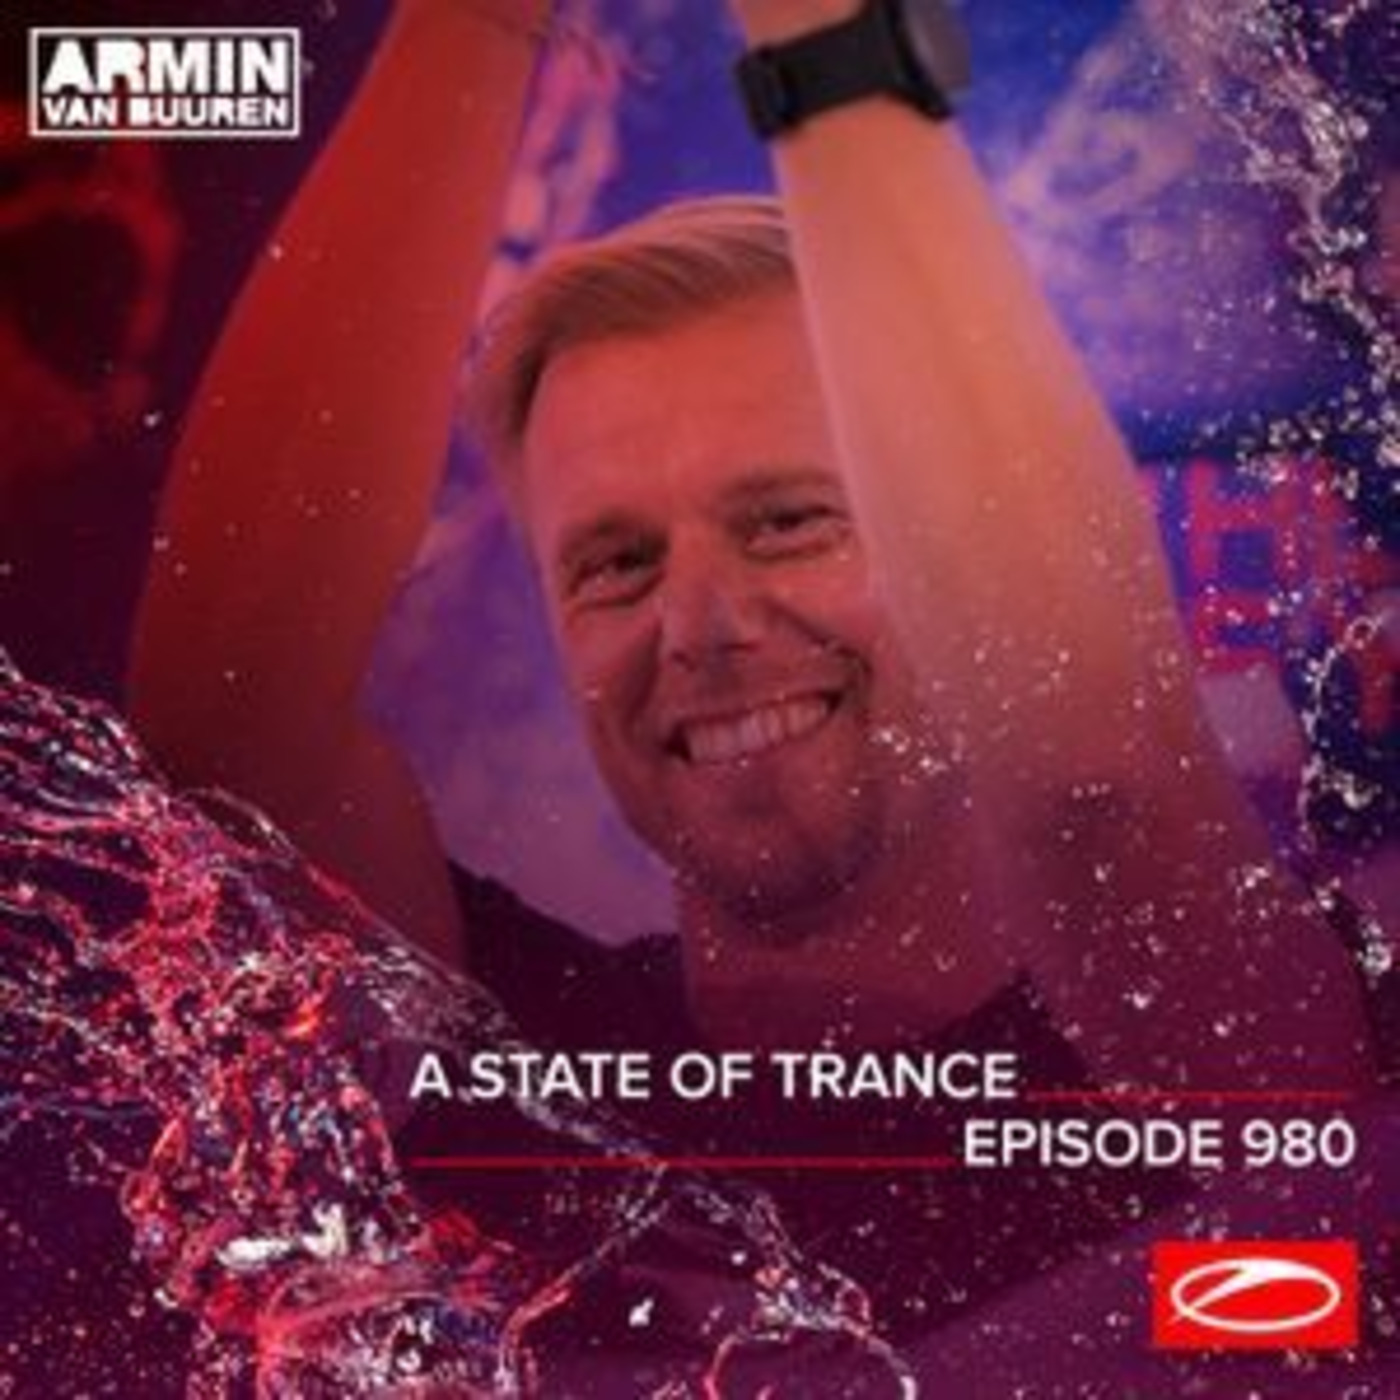 Armin van Buuren - A State of Trance 980 (03.09.2020)